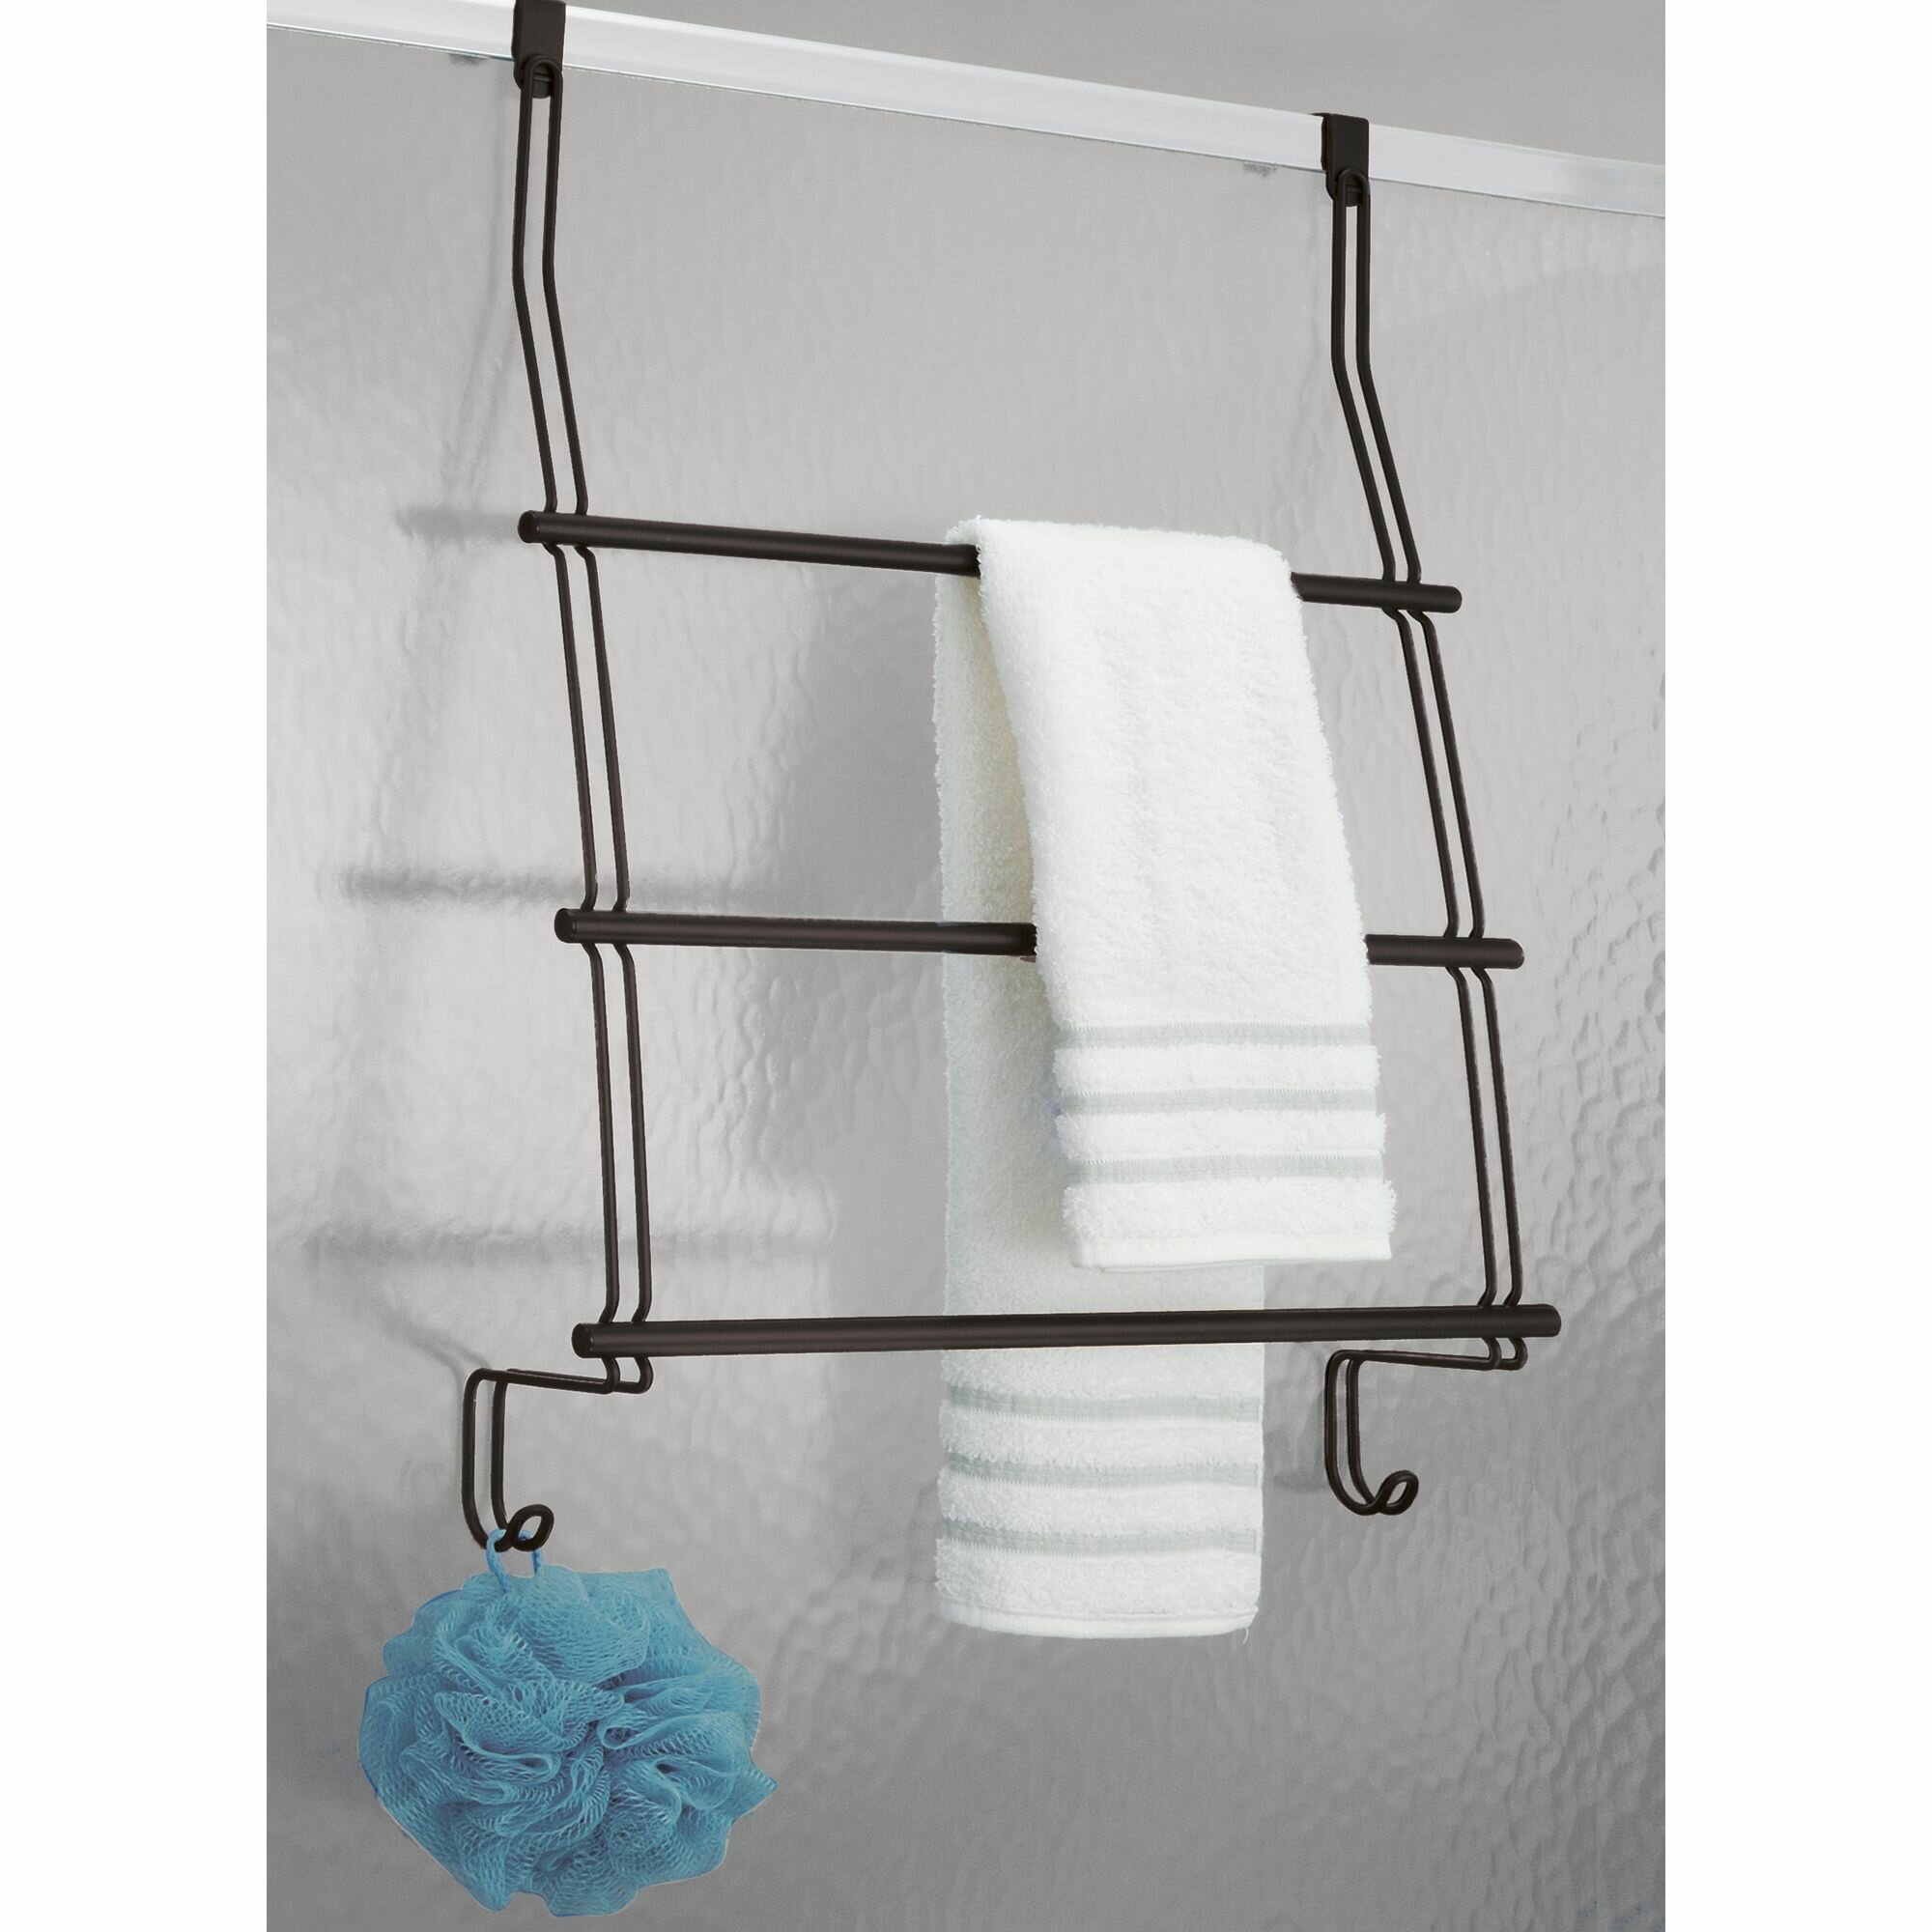 Rebrilliant Espana Over the Shower Door Towel Rack Matte Black 192461243901 eBay